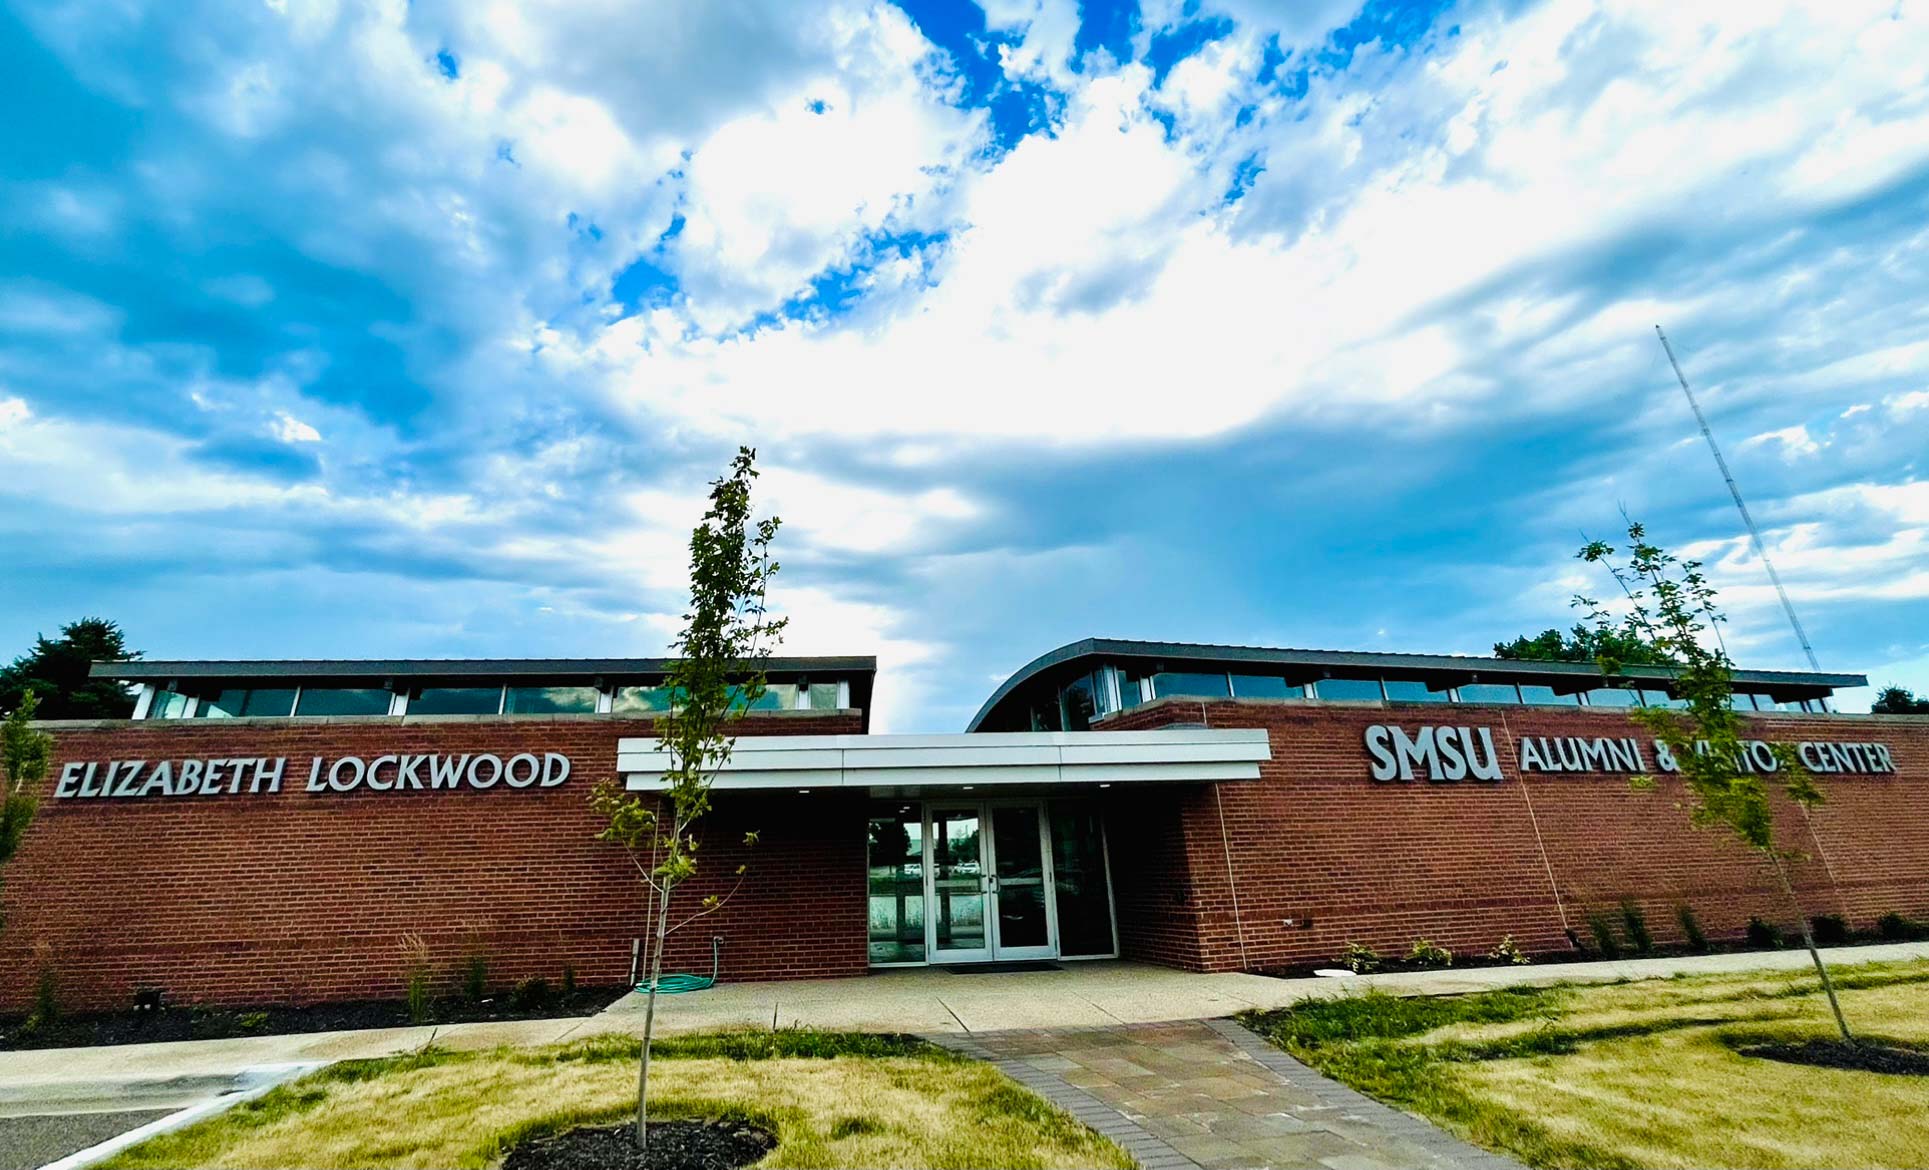 The Elizabeth Lockwood SMSU Alumni and Visitor Center